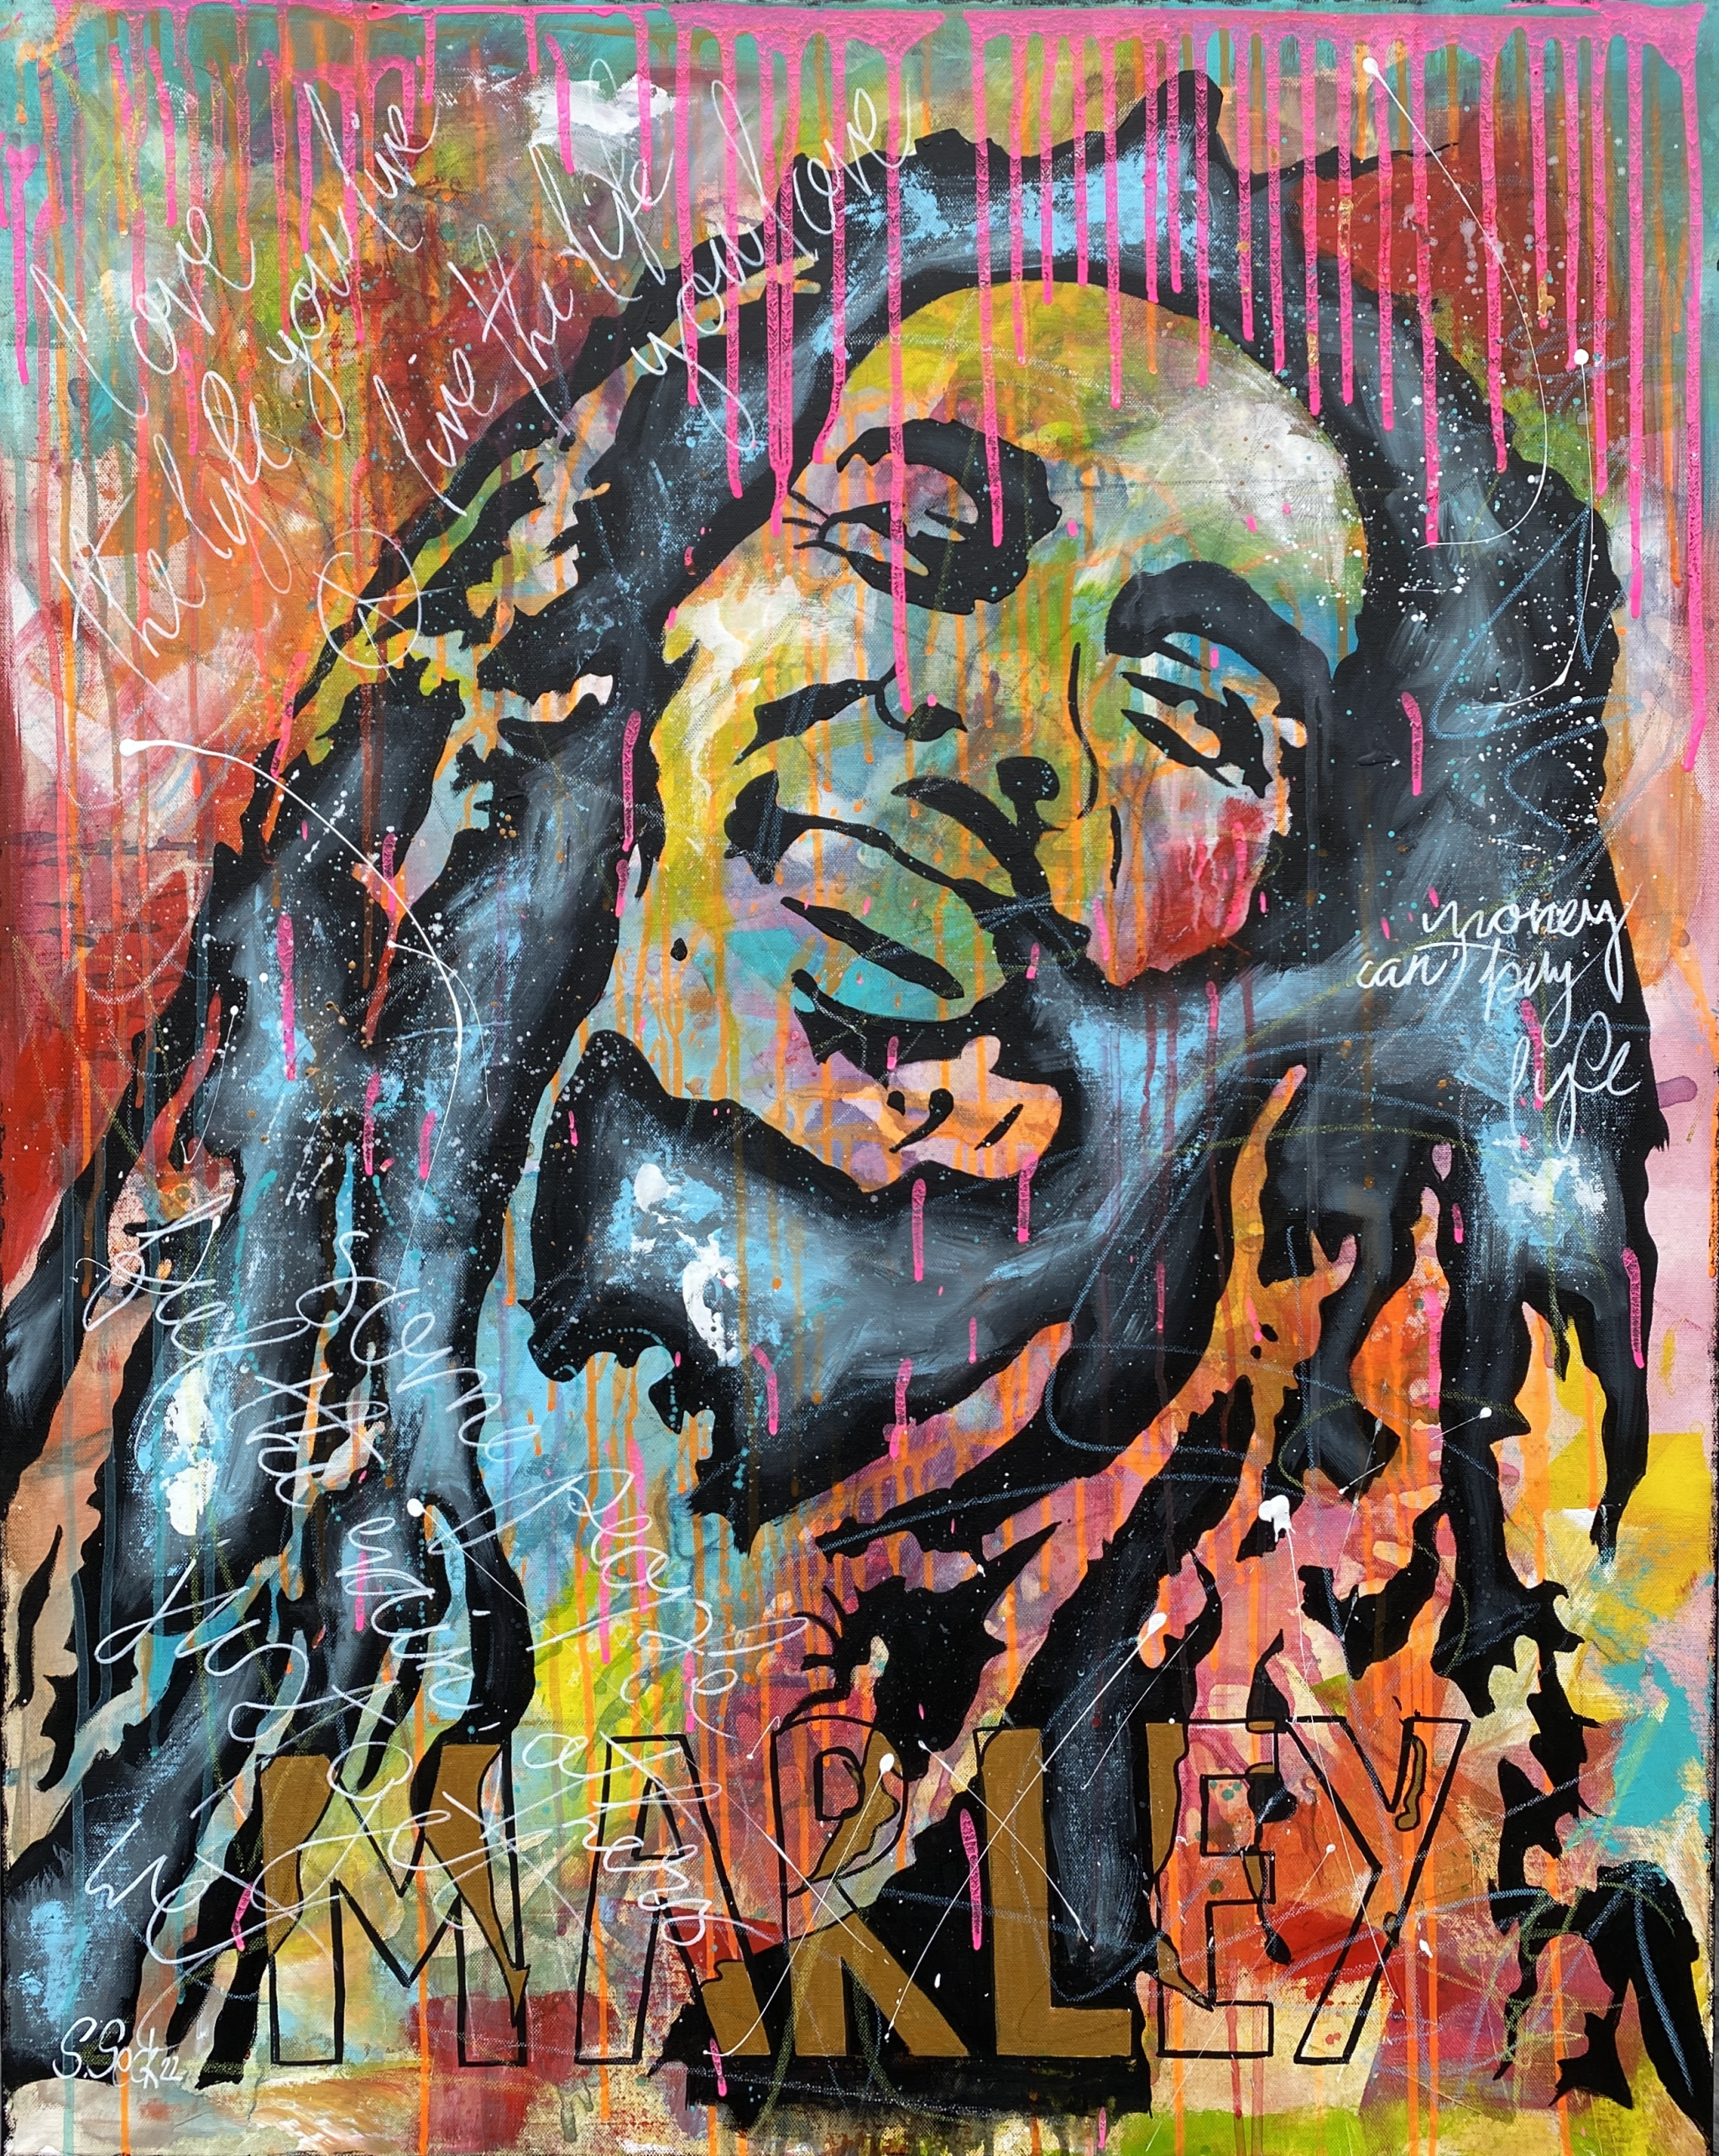 money can't buy life - Bob Marley - 80 cm x 100 cm